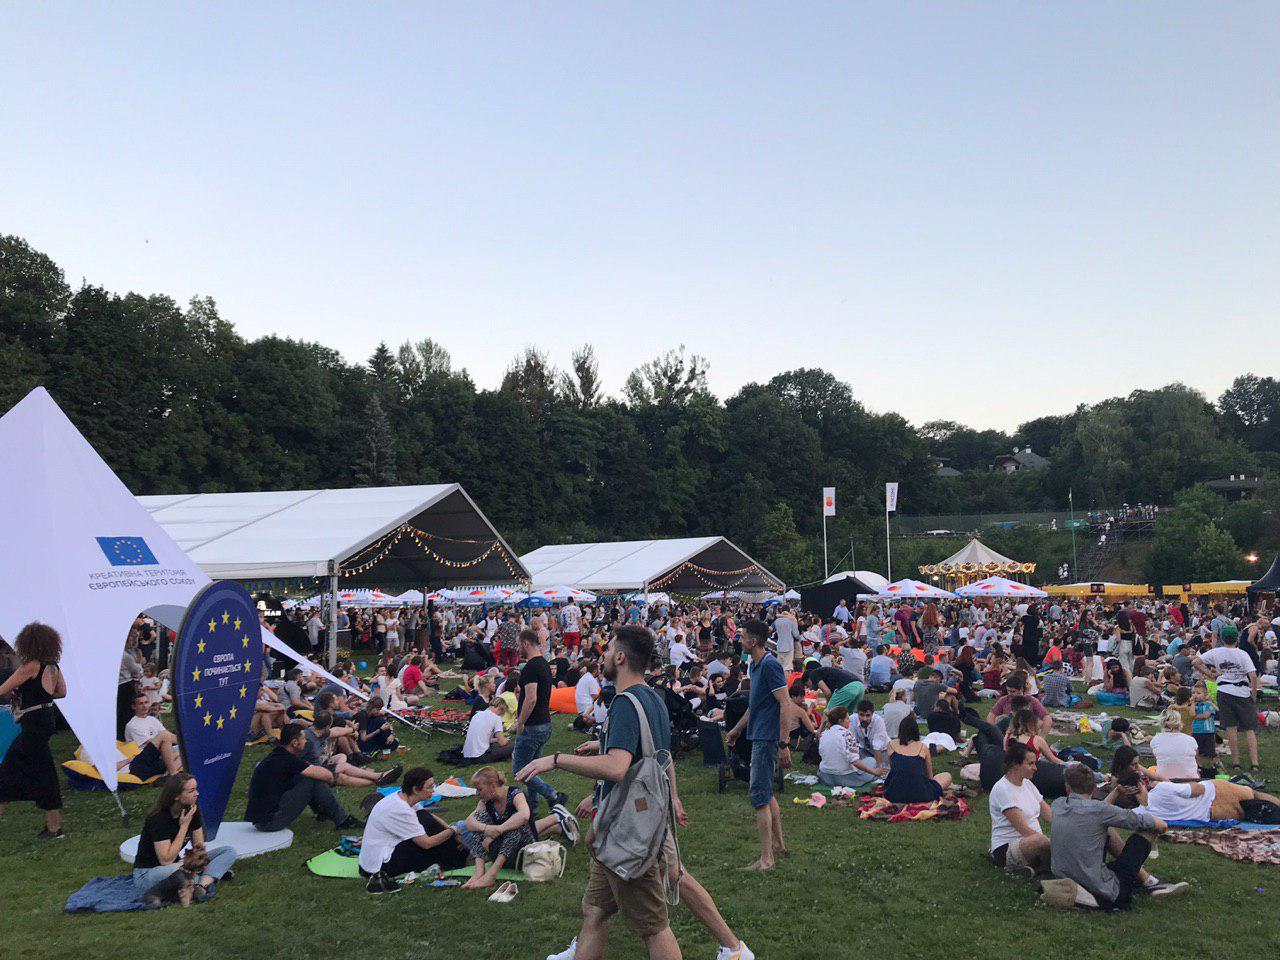 EU zone at a music festival